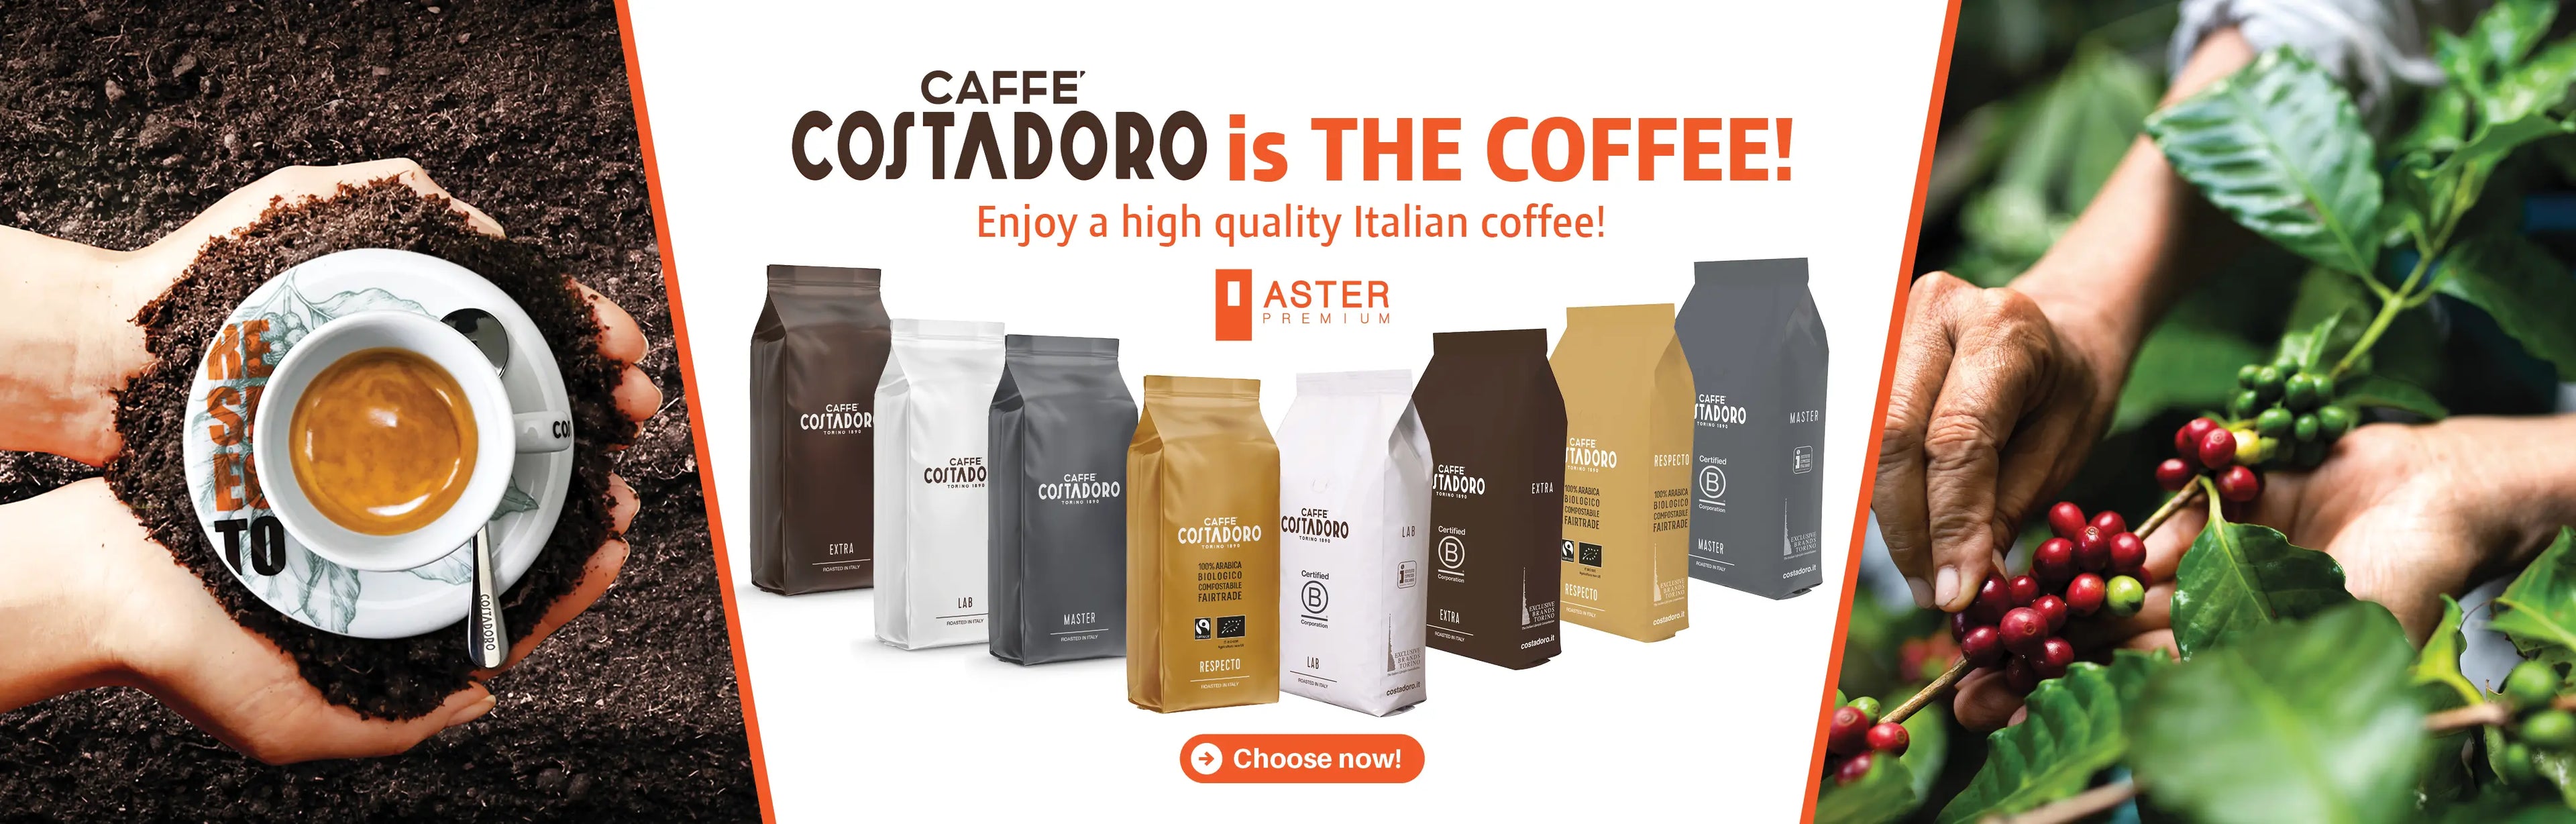 Caffe Costadoro - High quality italian coffee - shop now!